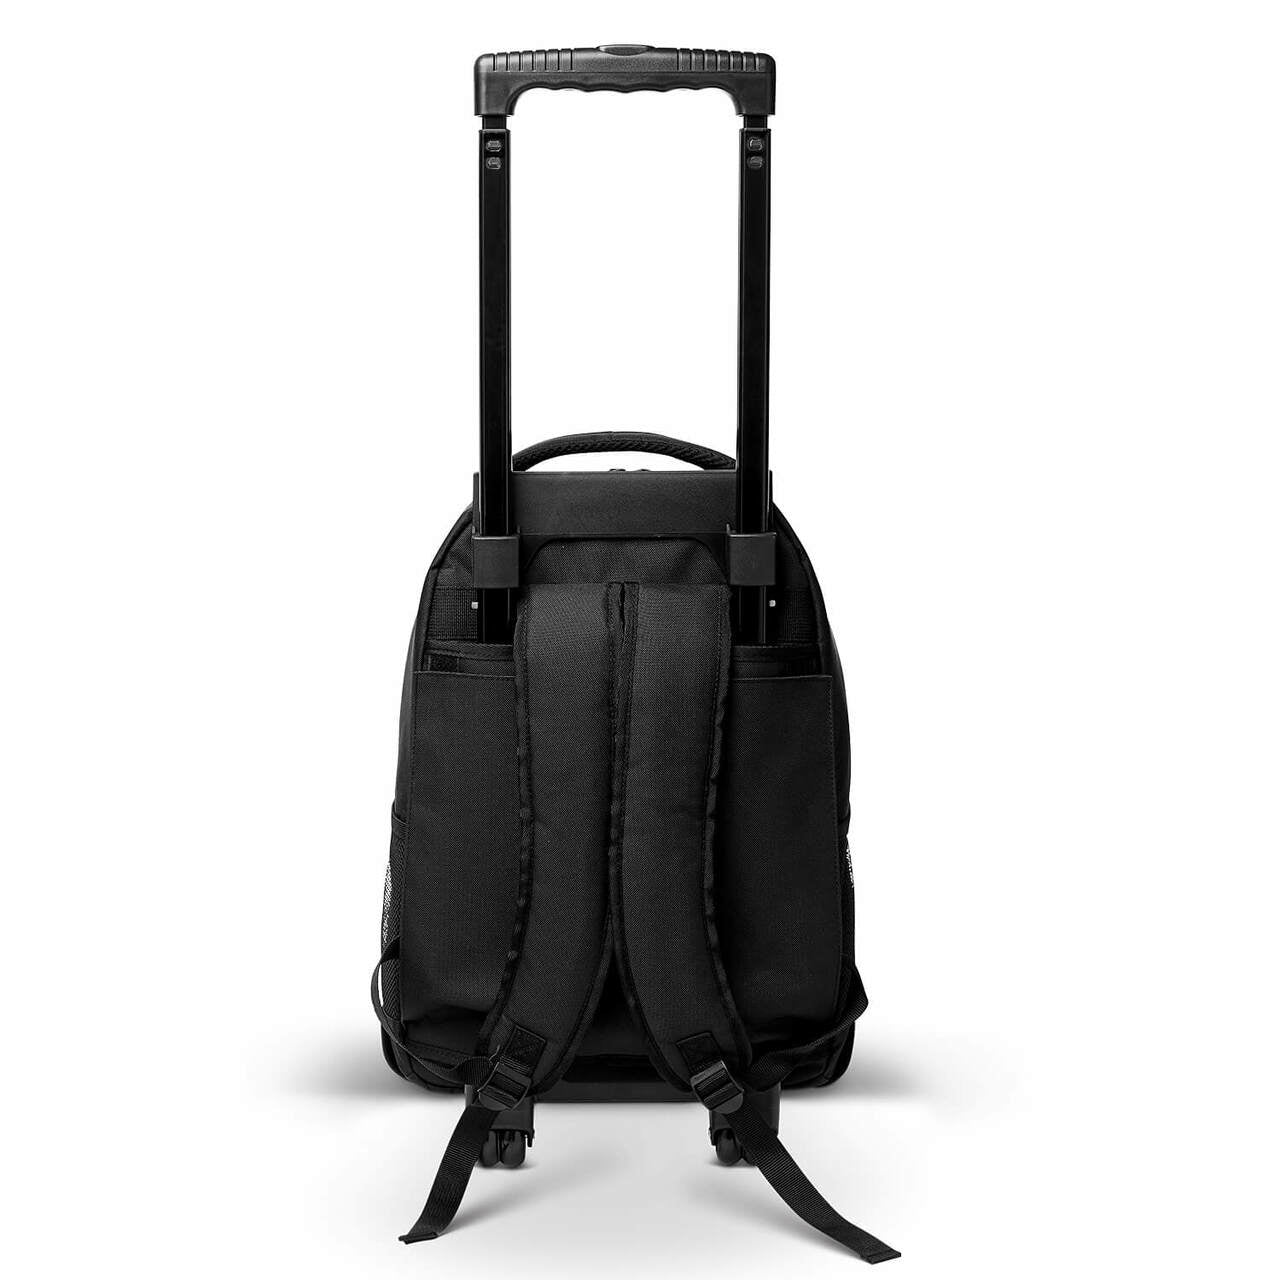 Washington Commanders 18" Wheeled Tool Bag Backpack